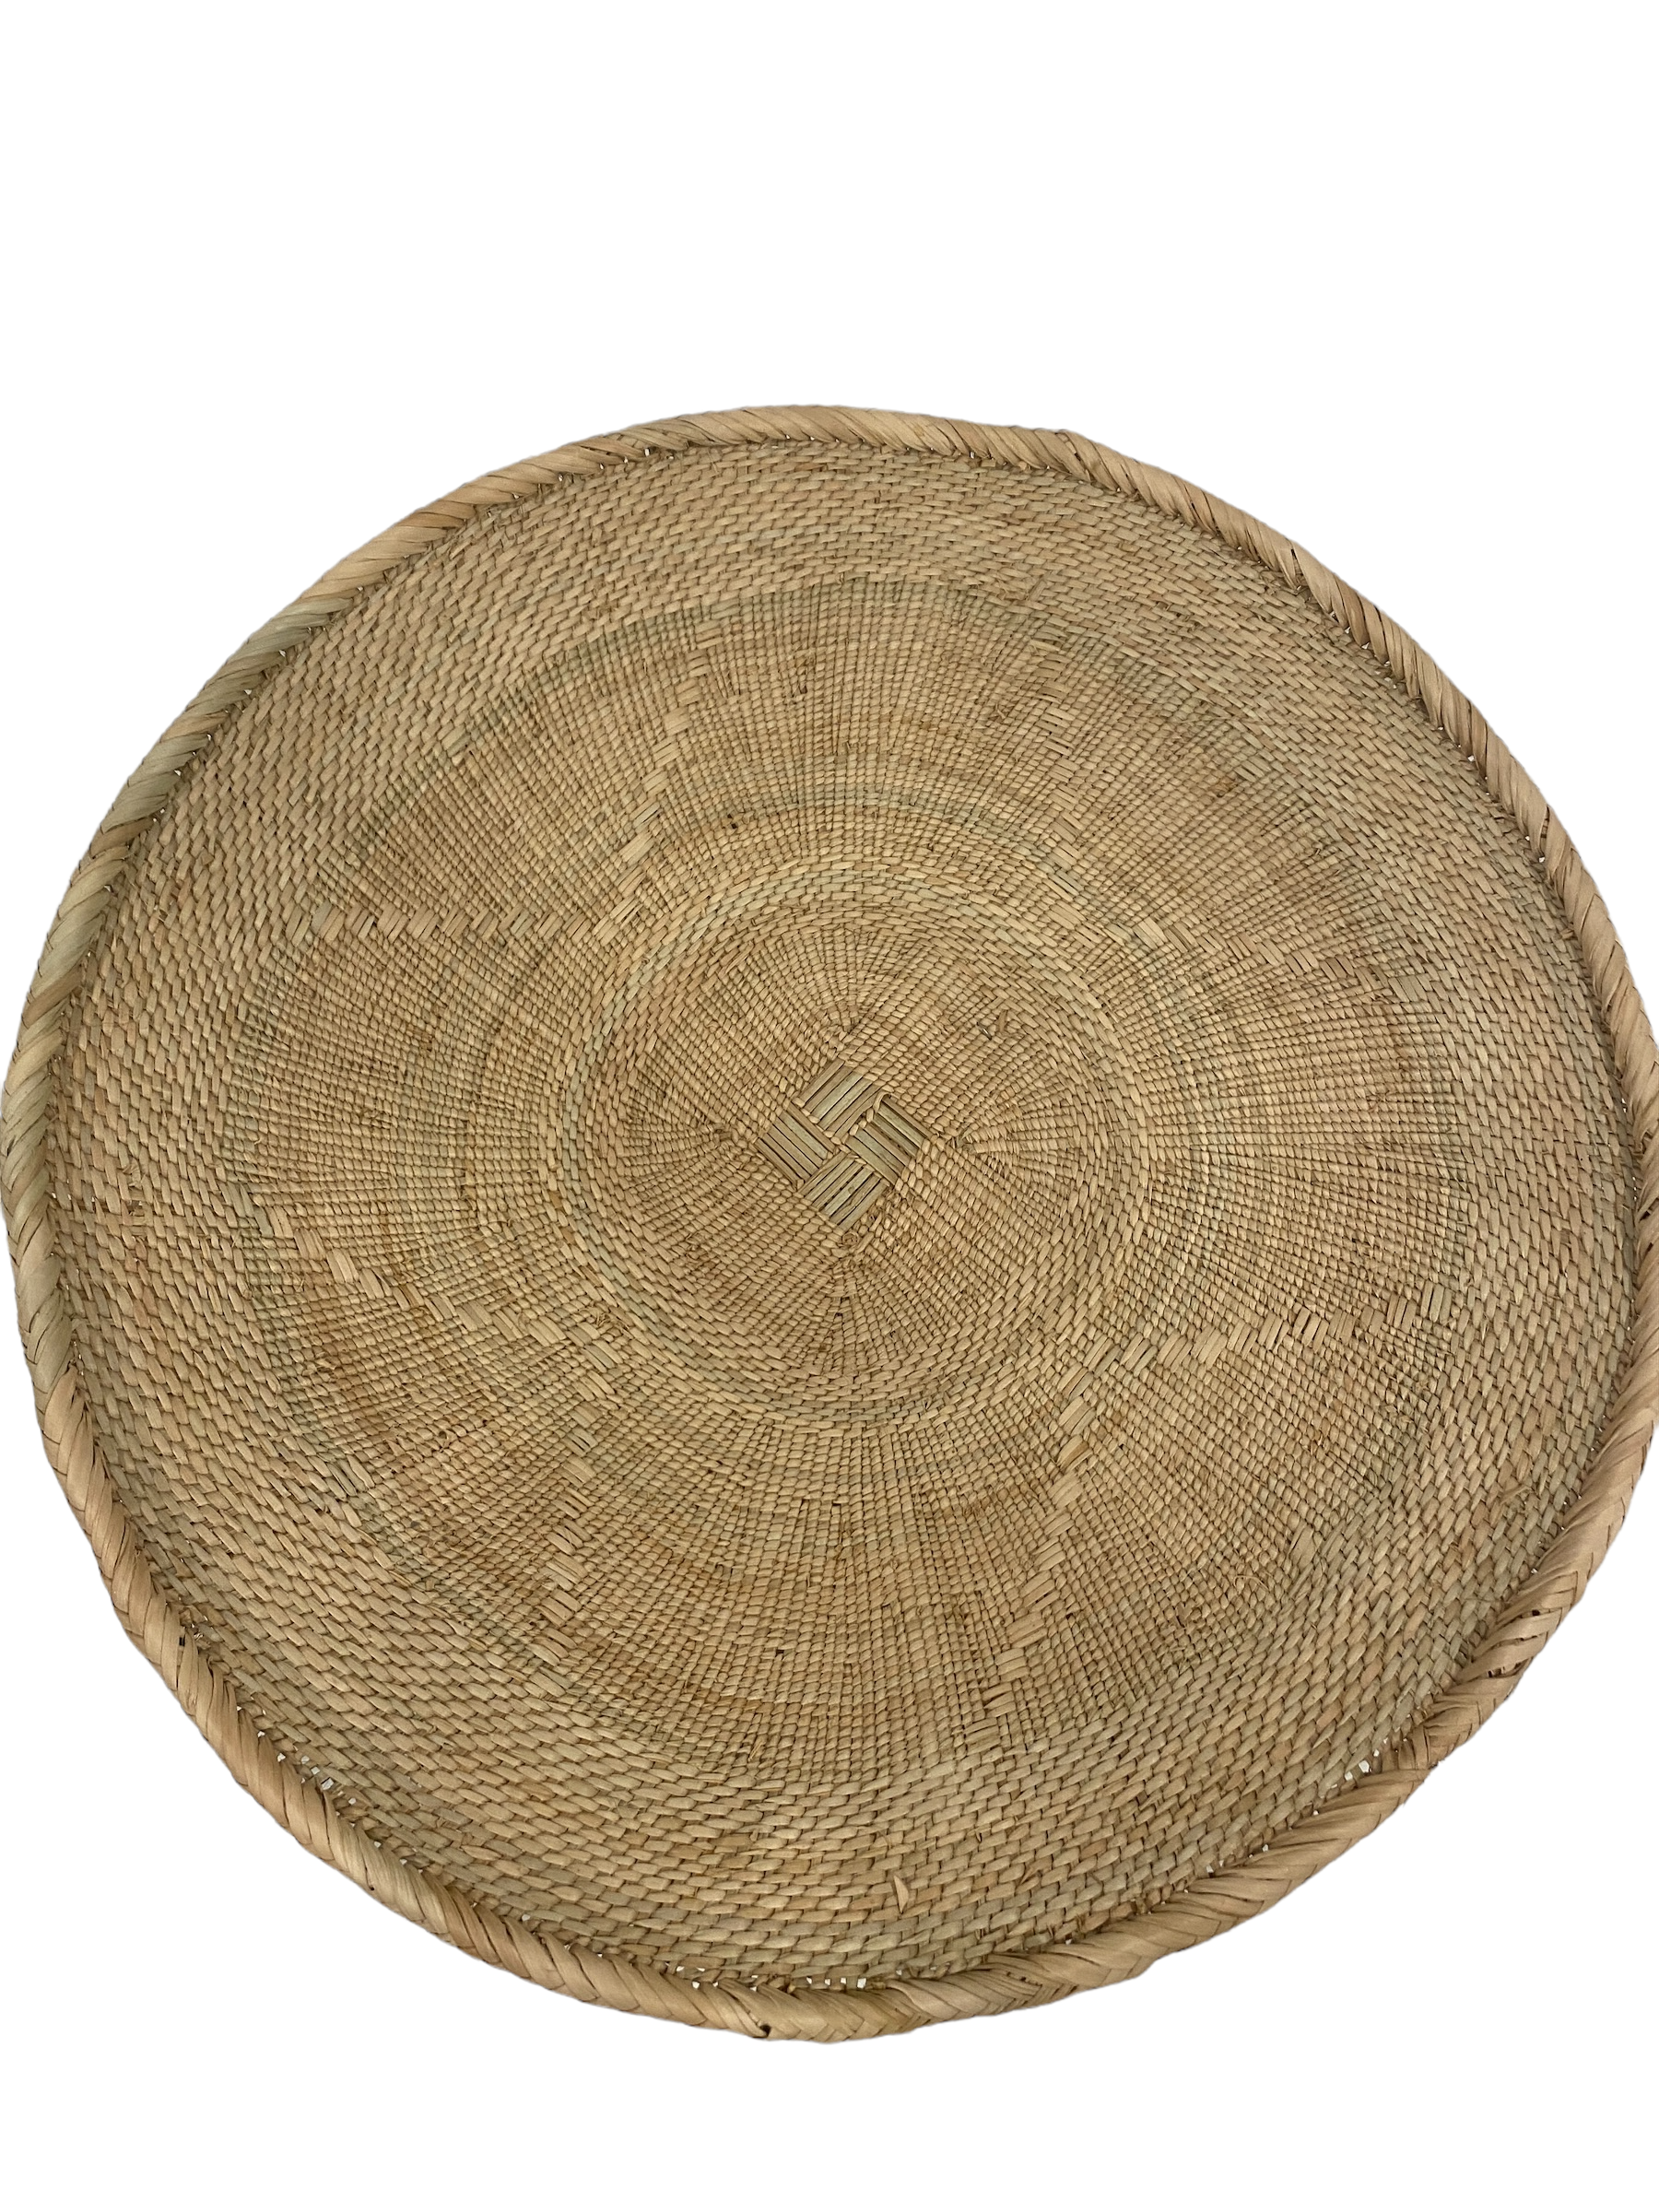 Tonga Basket Natural